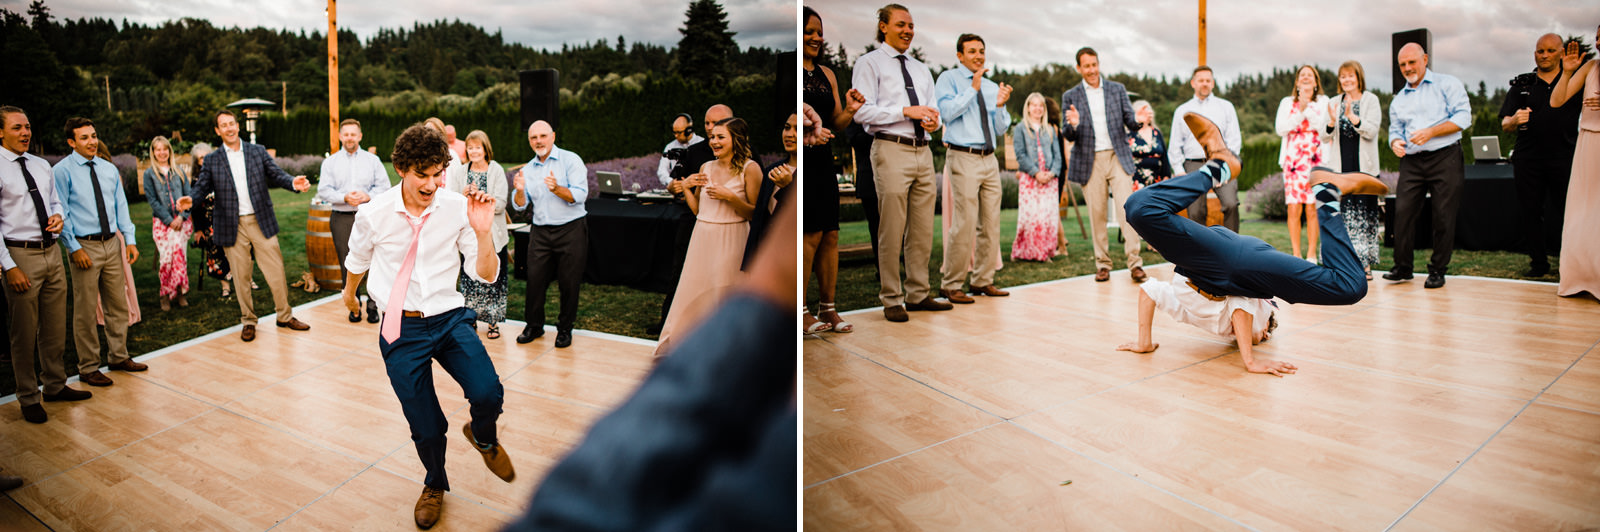 110-woodinville-lavendar-farm-wedding-with-golden-glowy-photos.jpg